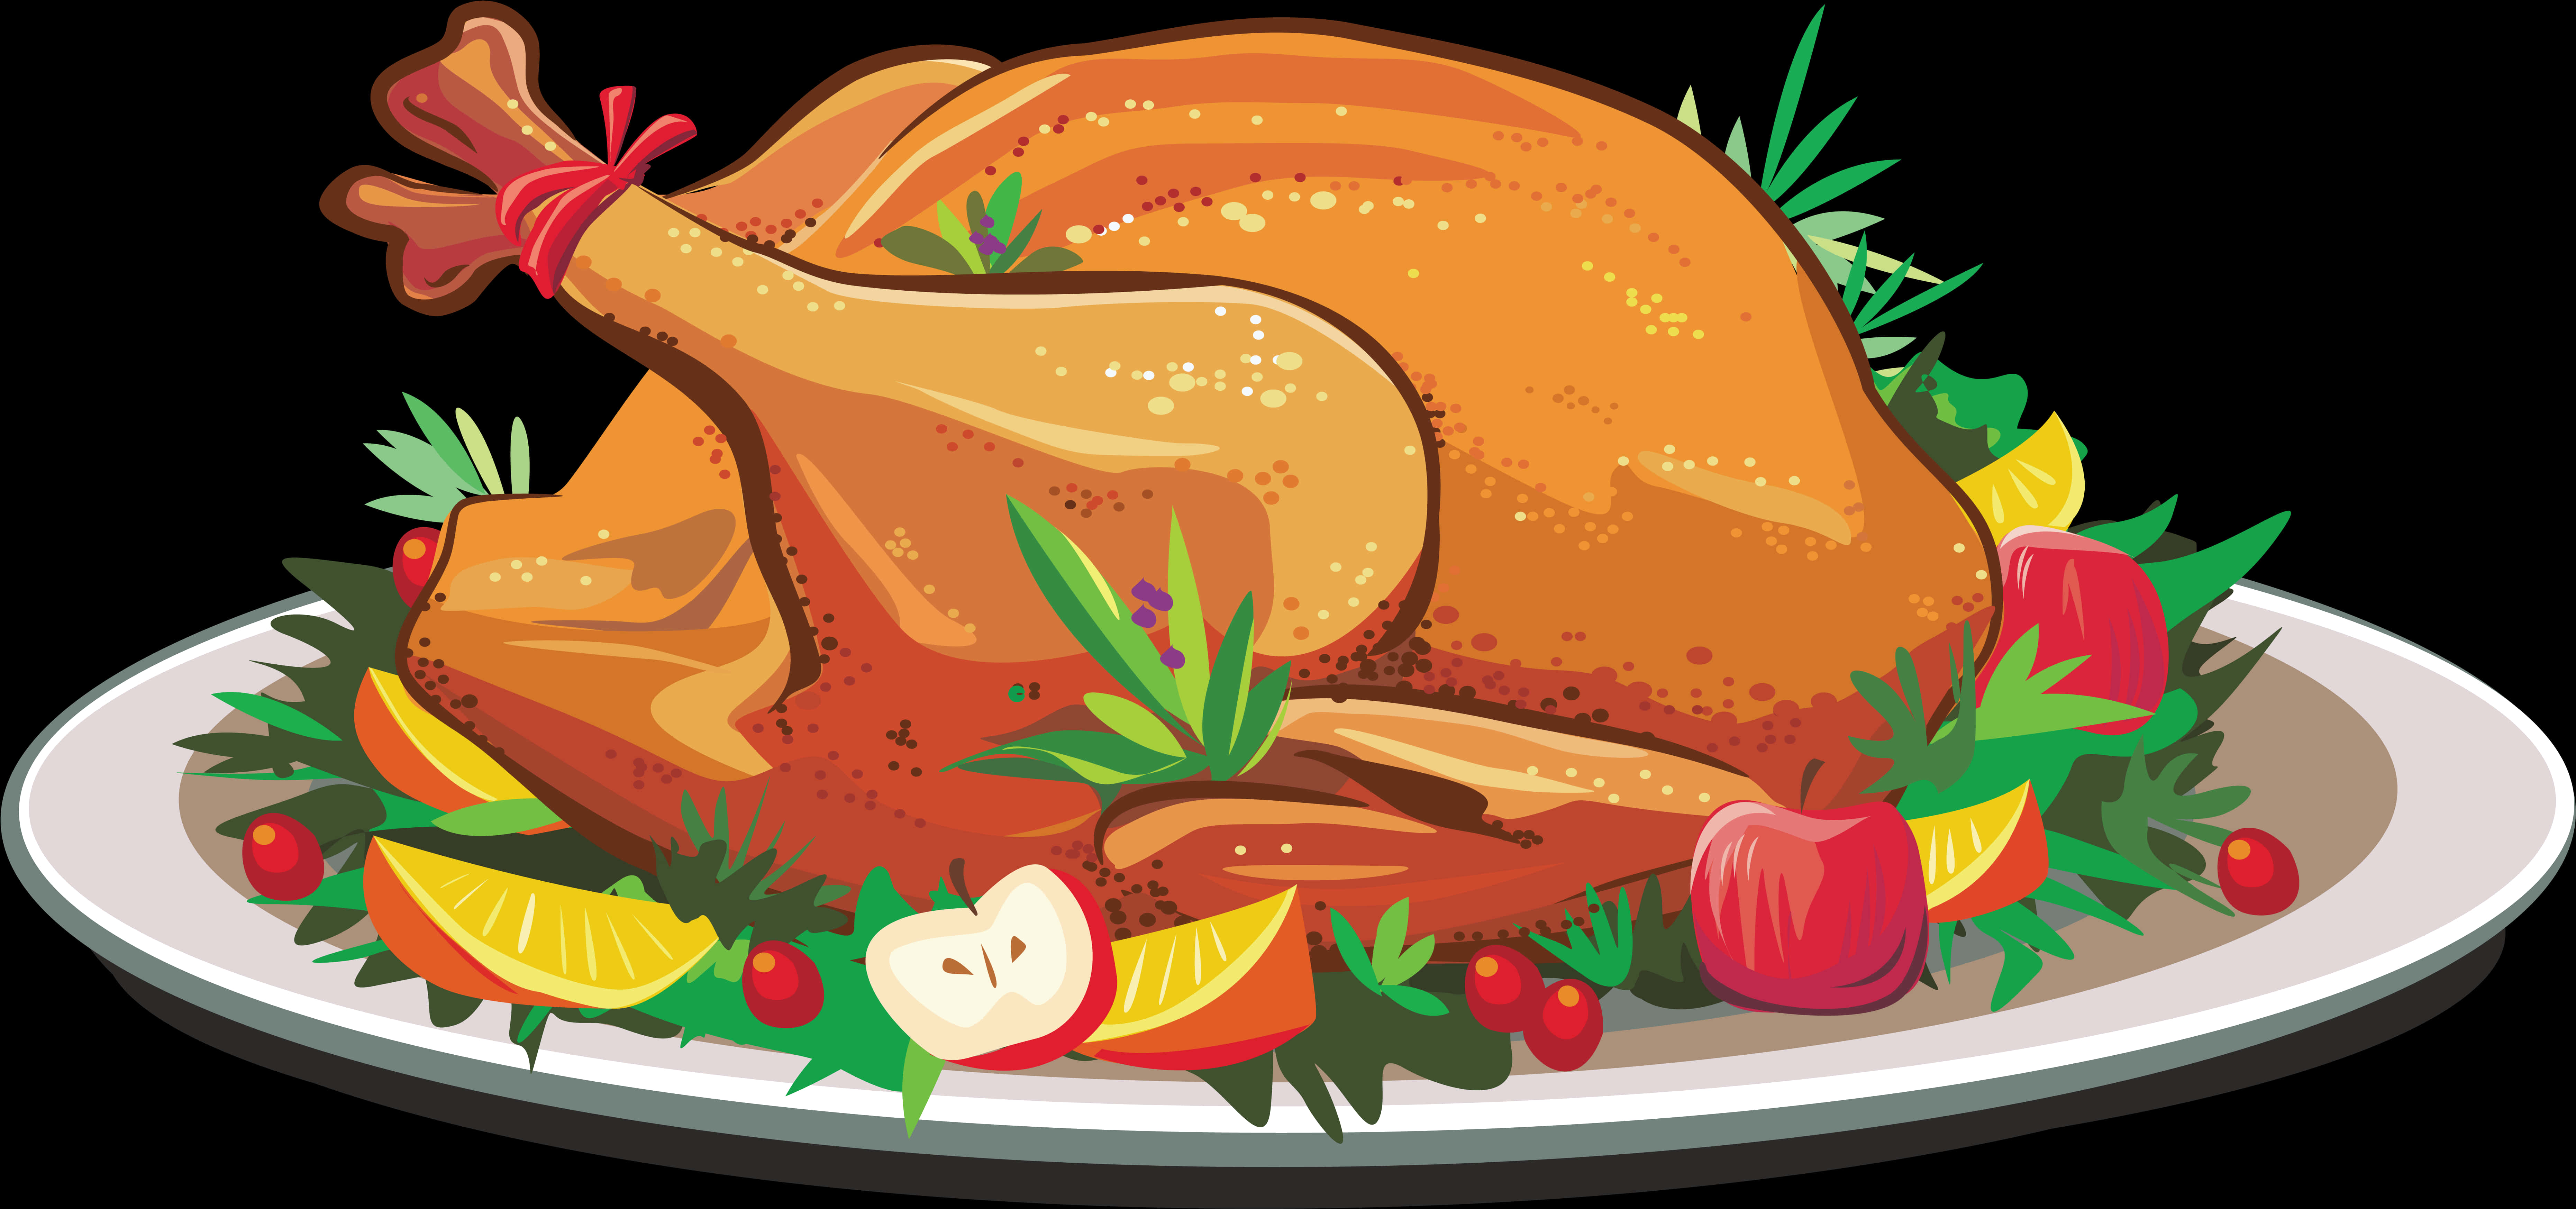 Roasted Turkey Dish Illustration